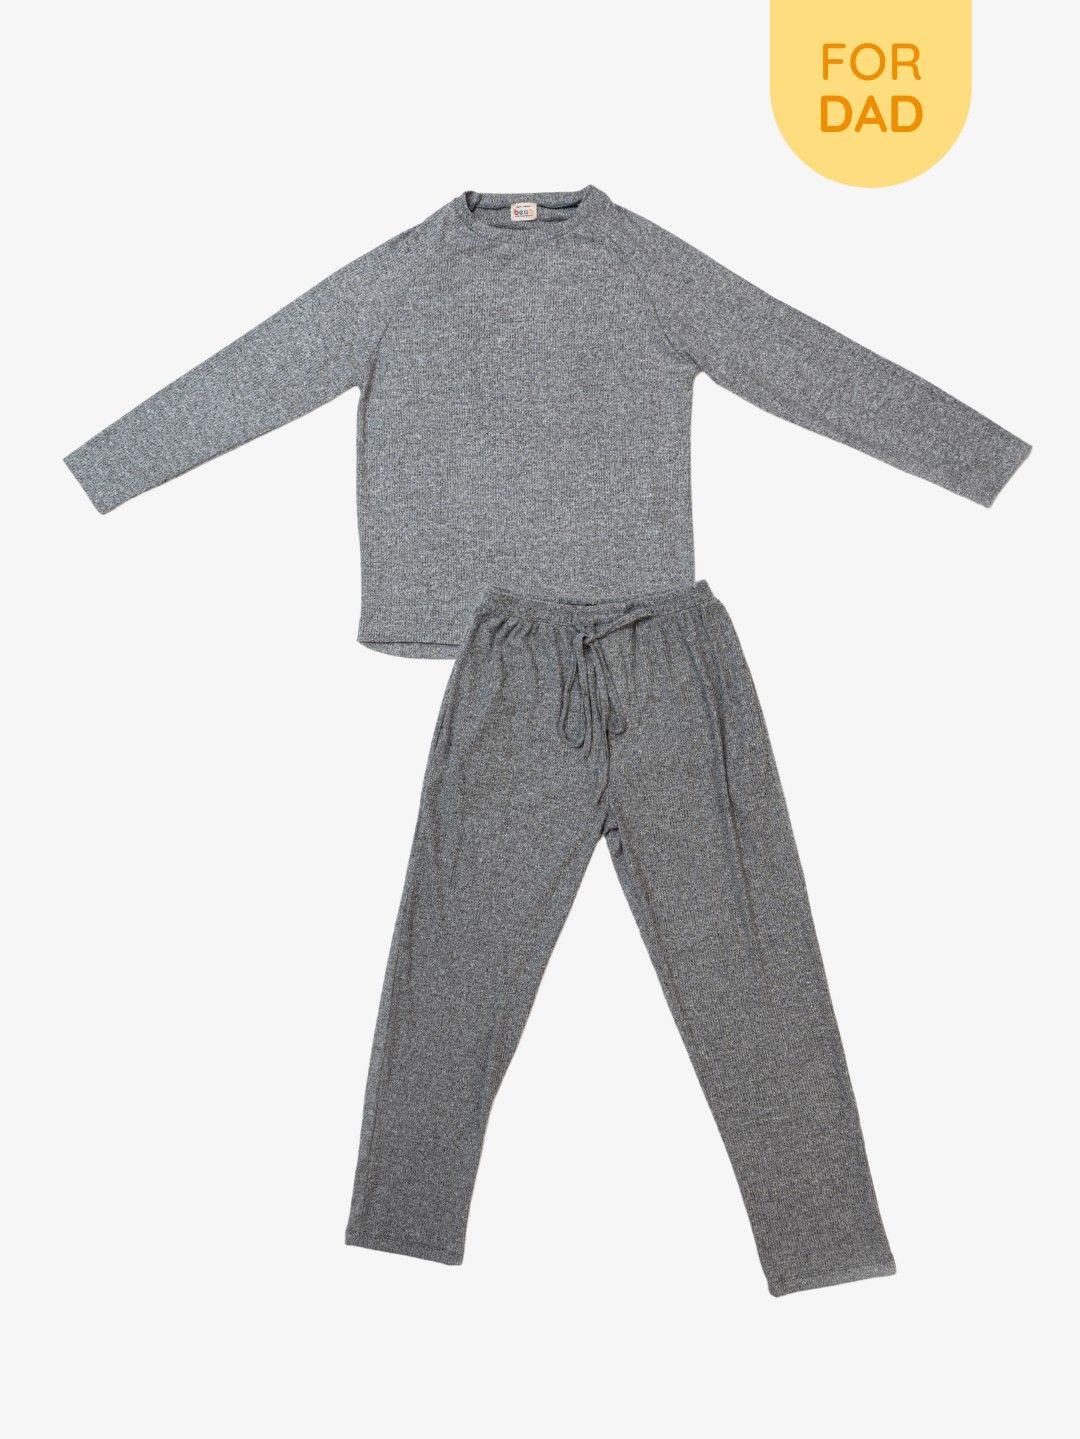 bean fashion Ribbed Cotton Sleep Pajama Set for Dad (No Color- Image 1)